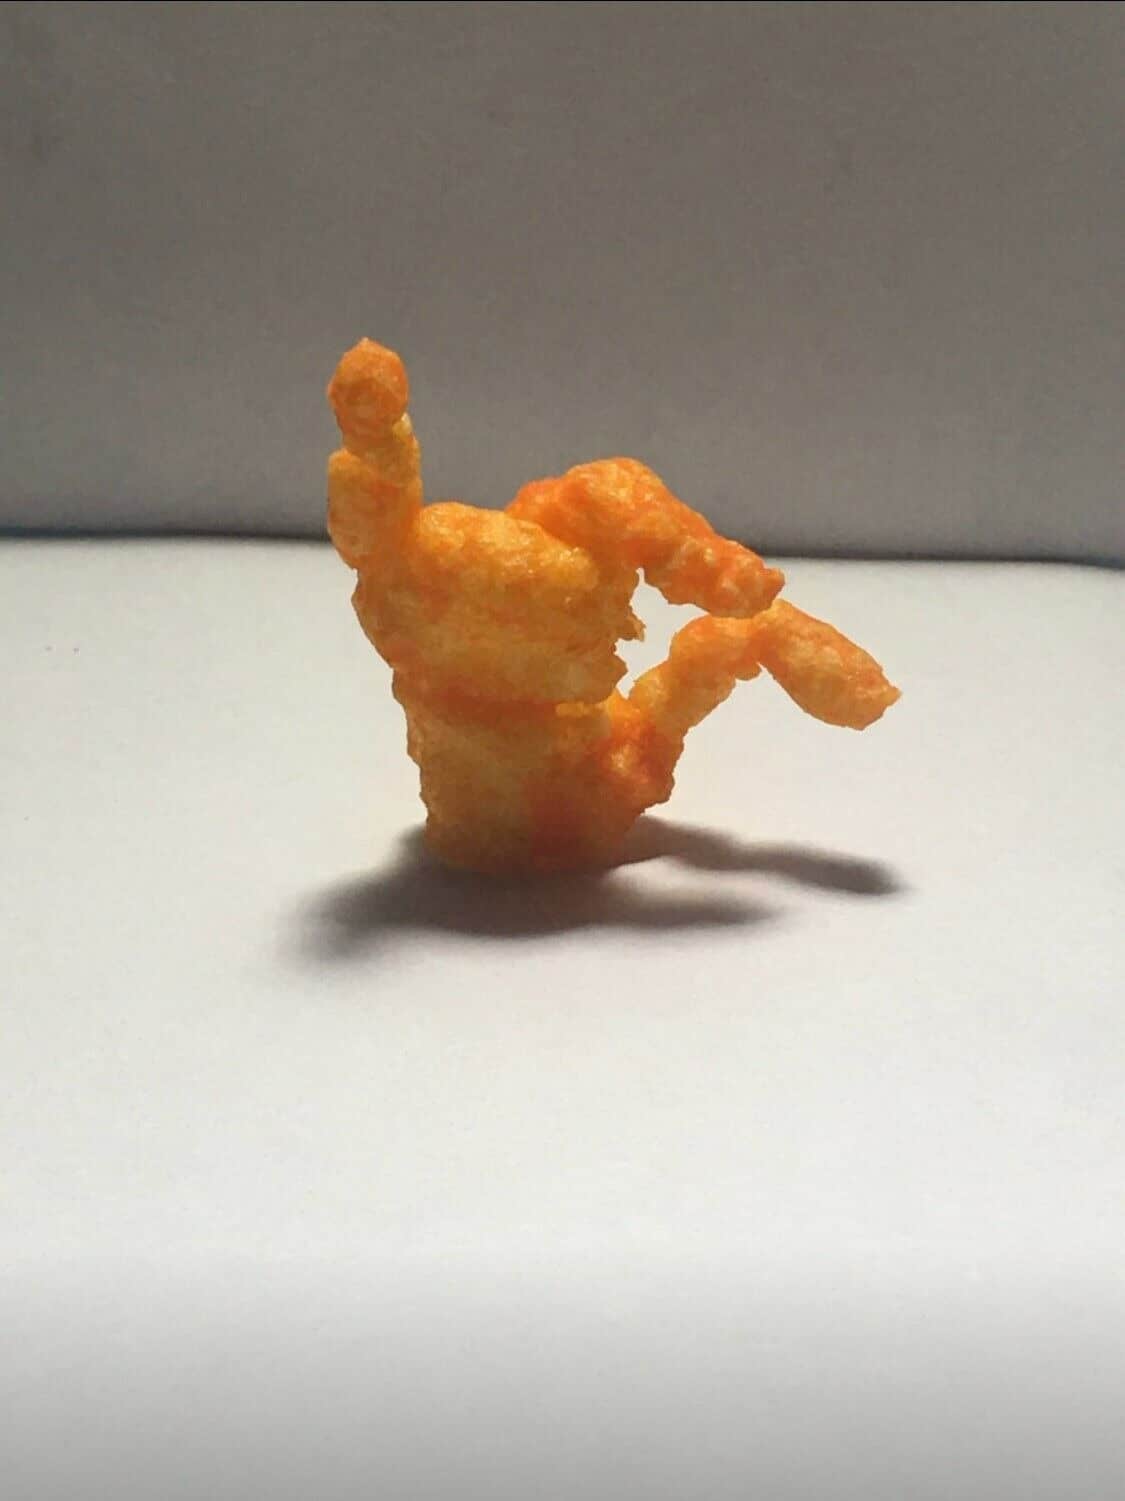 RARE Pikachu-Shaped Cheeto